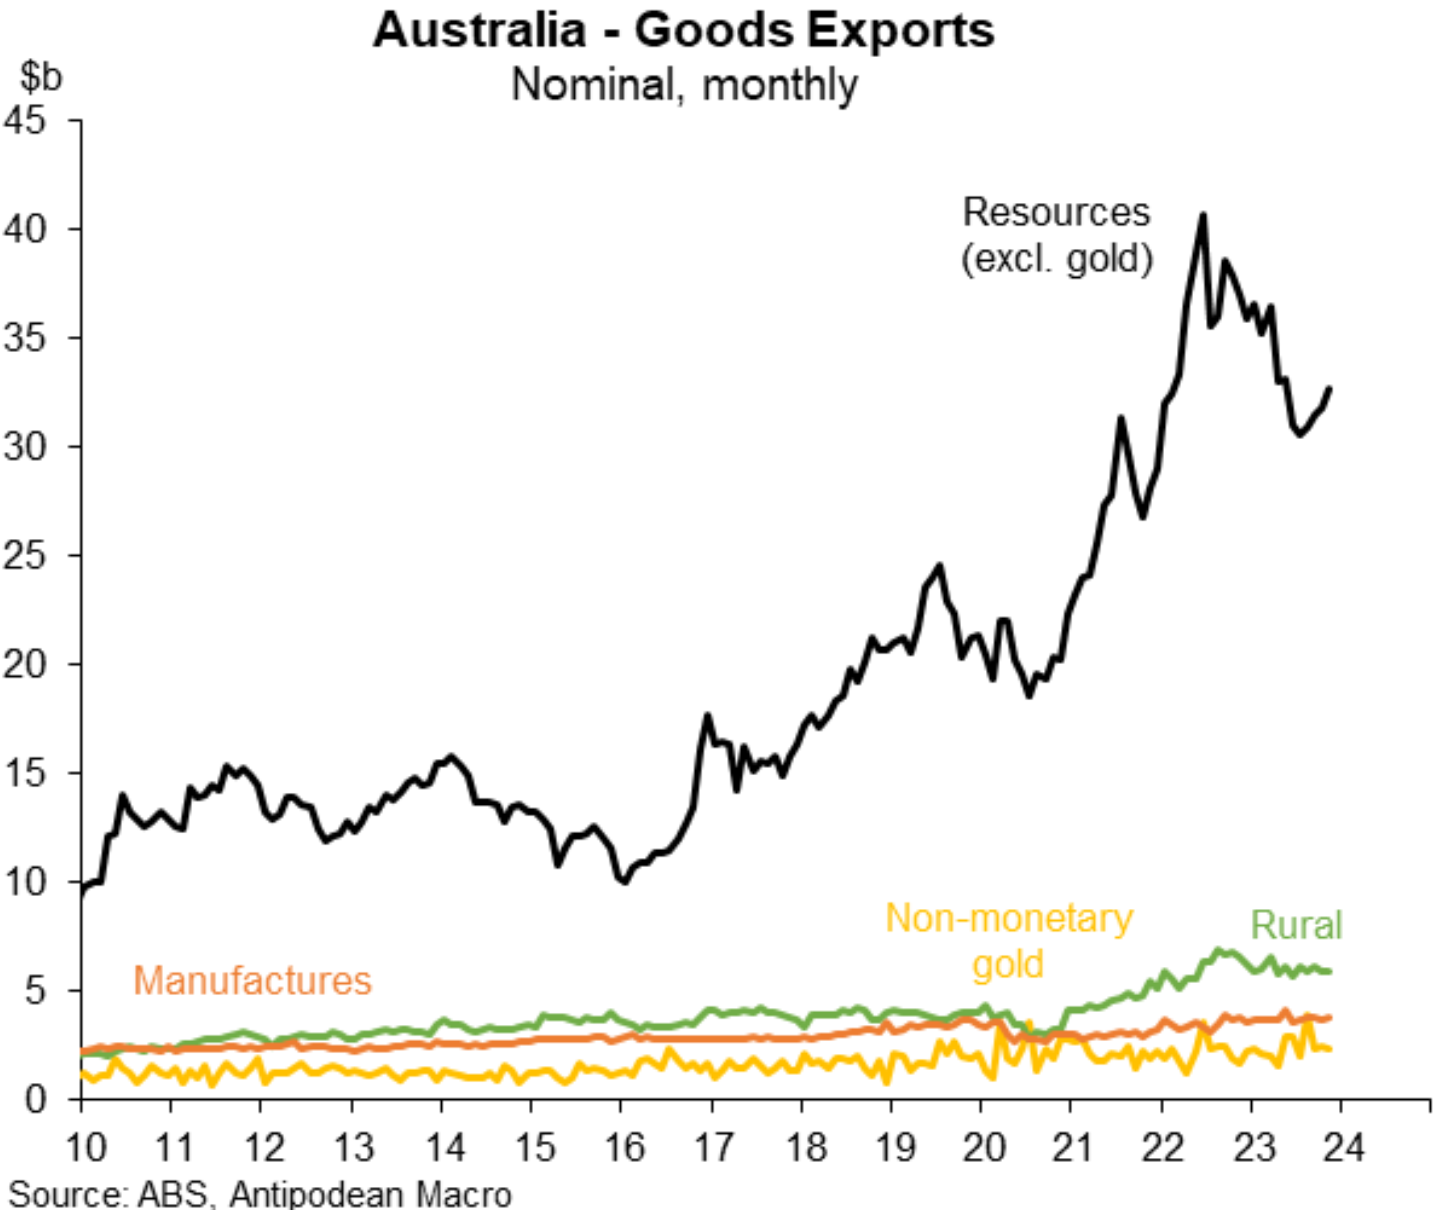 Australian goods exports